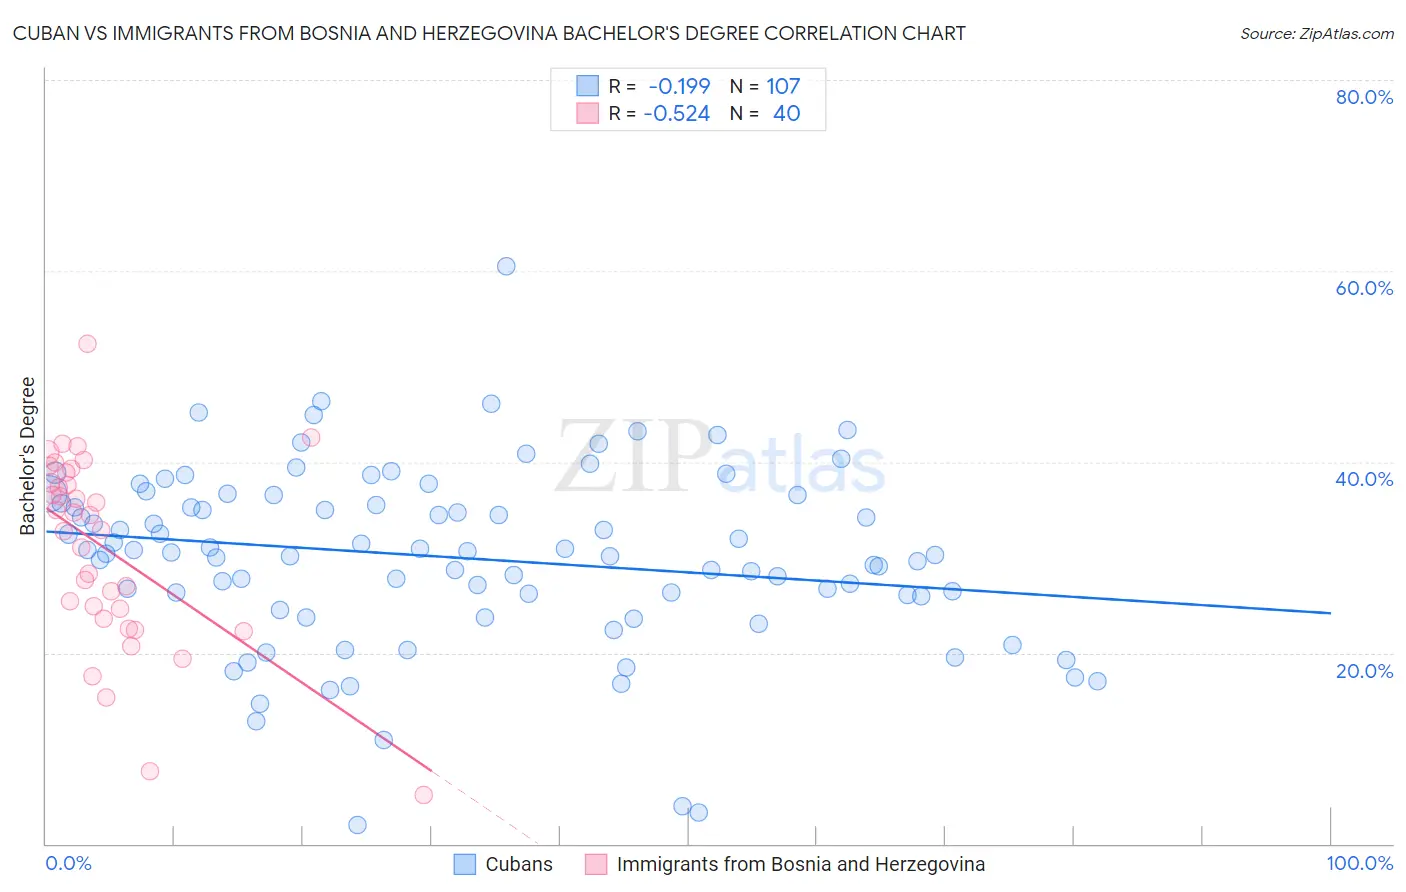 Cuban vs Immigrants from Bosnia and Herzegovina Bachelor's Degree